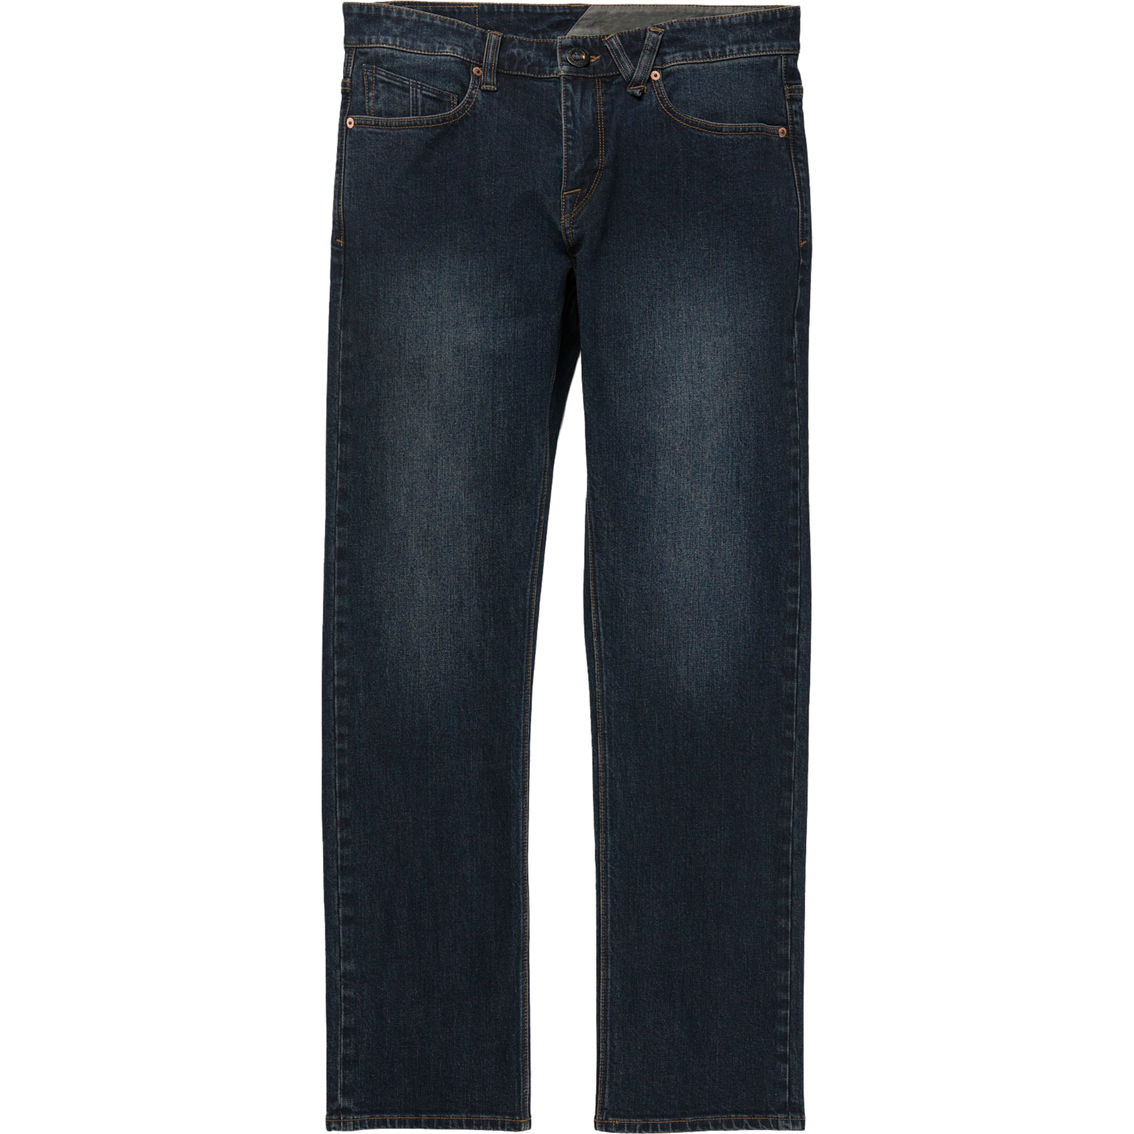 Volcom Solver New Vintage Denim Jeans | Jeans | Clothing & Accessories ...